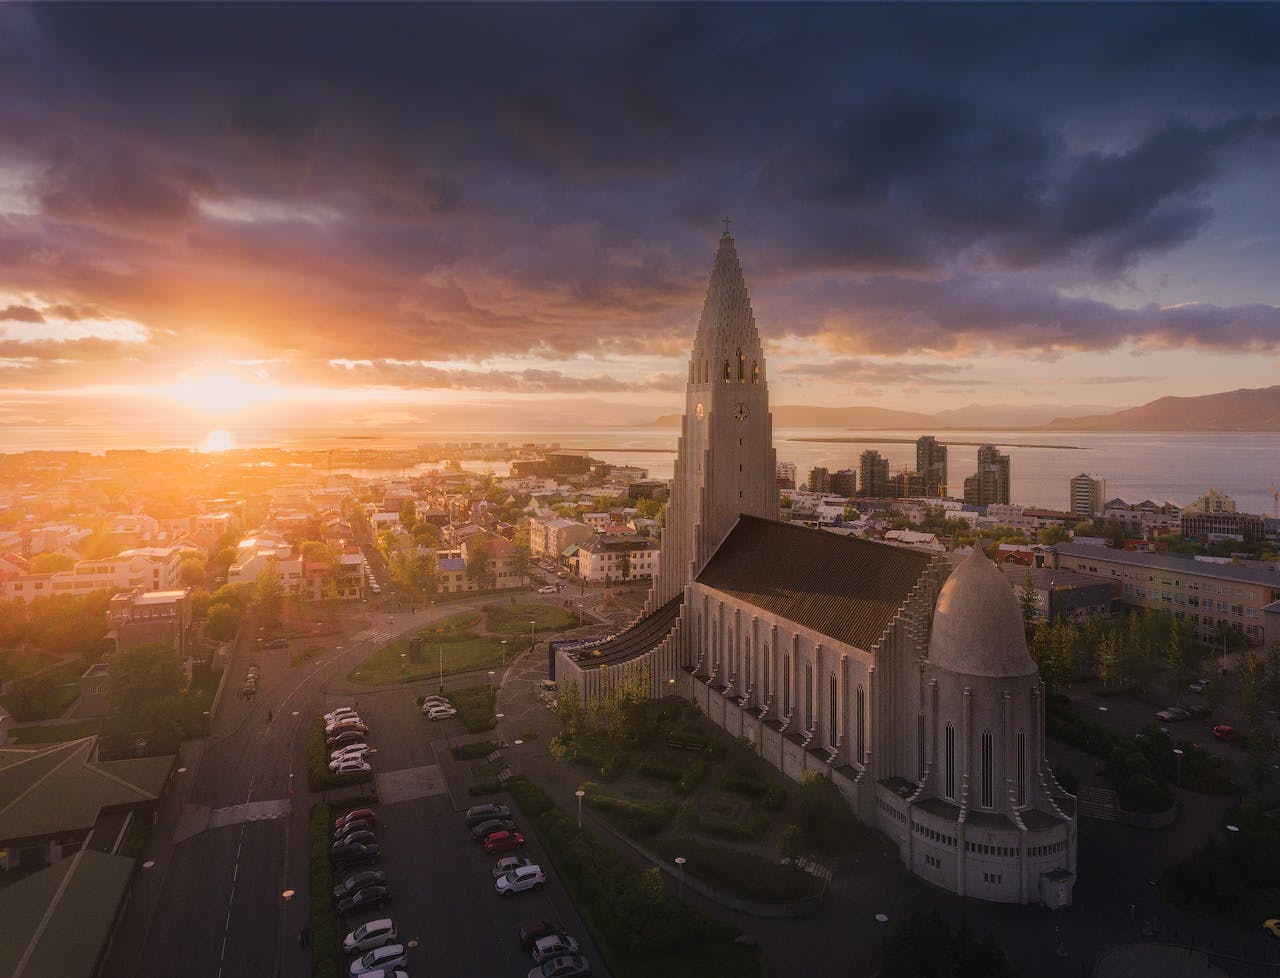 Hallgrímskirkja church awash in the glow of the Midnight Sun of the Icelandic summertime.